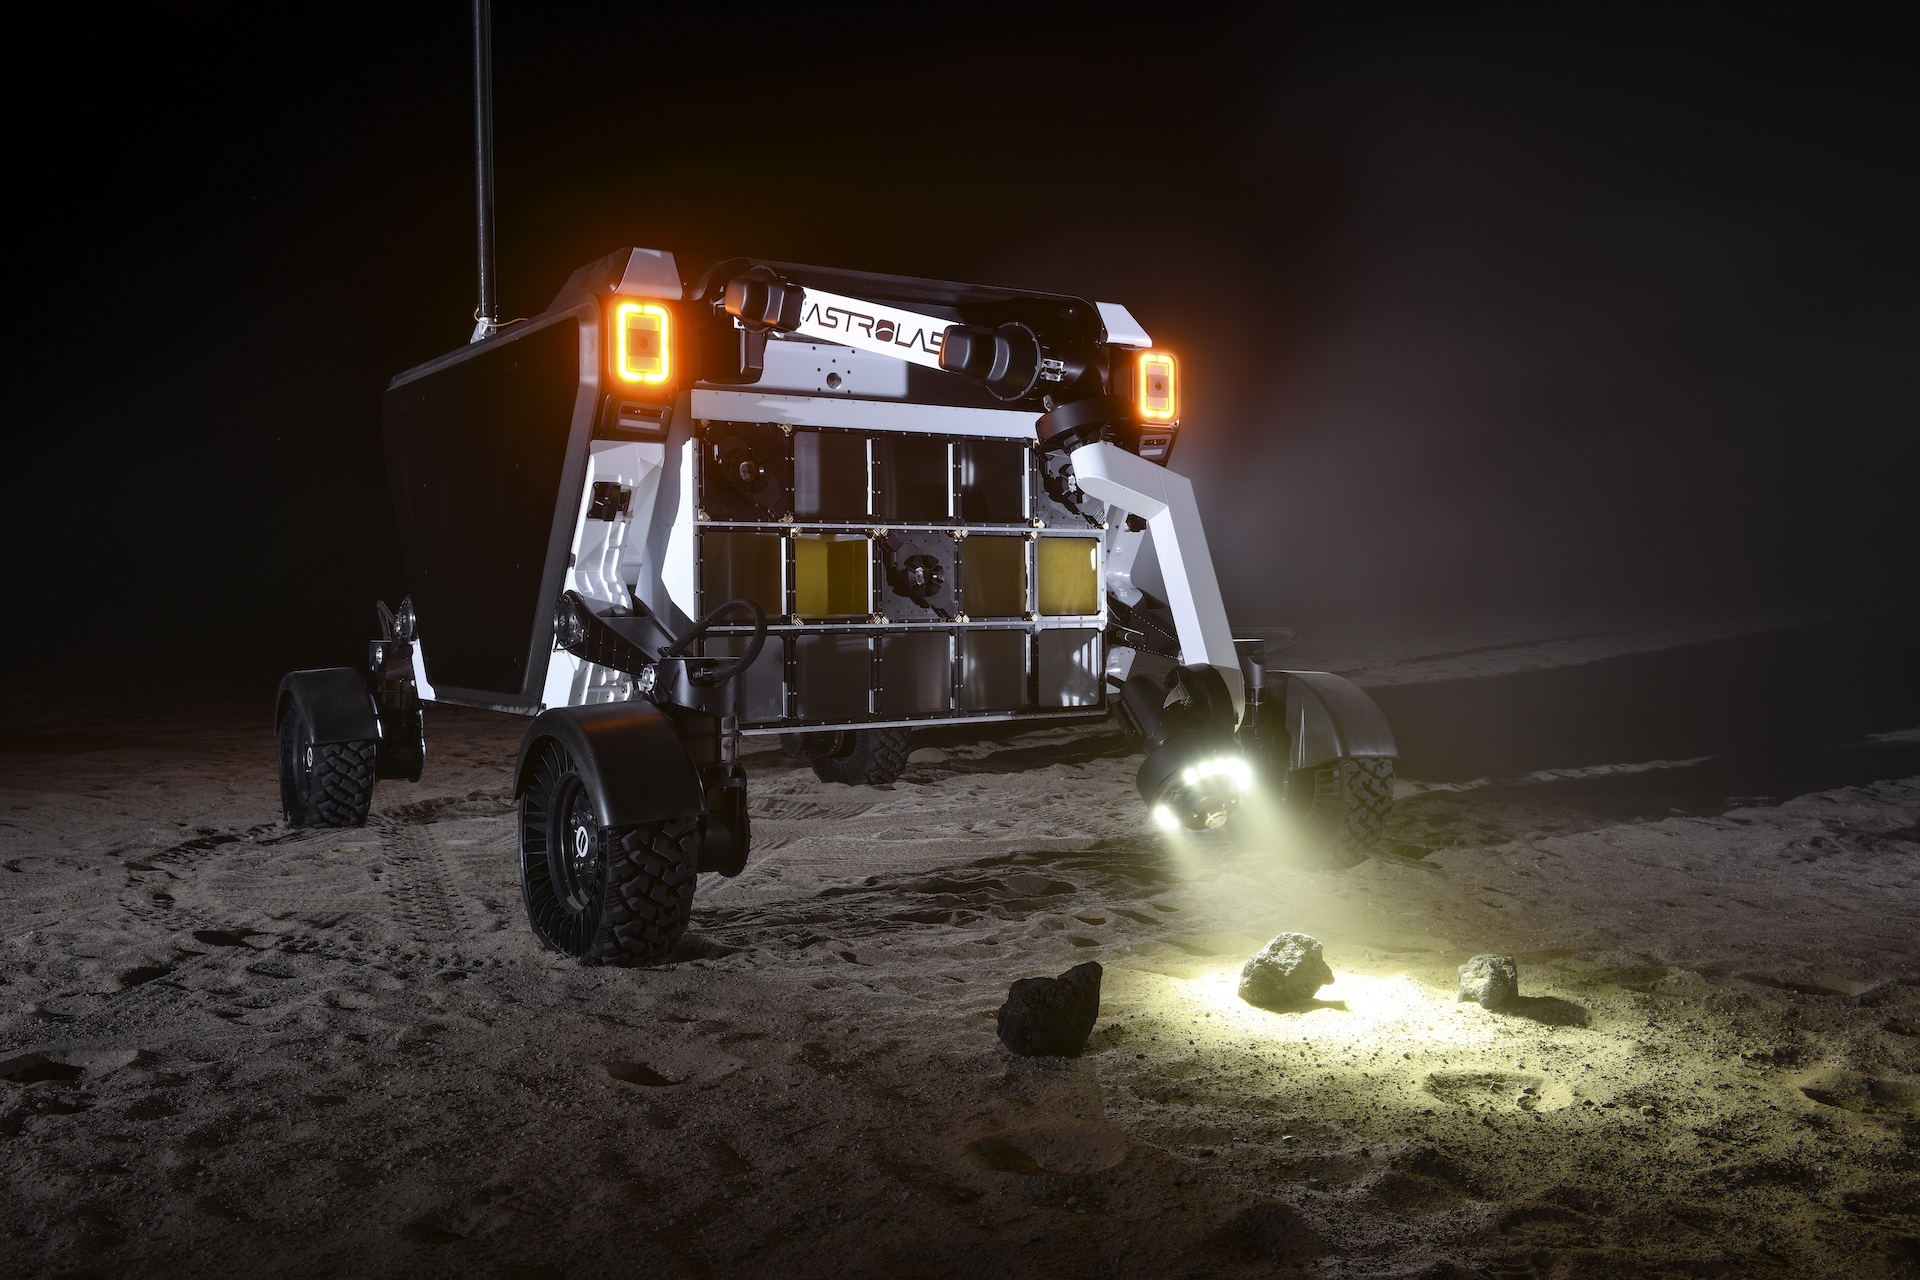 AstroLab Flexible Logistics and Exploration (FLEX) Lunar Rover